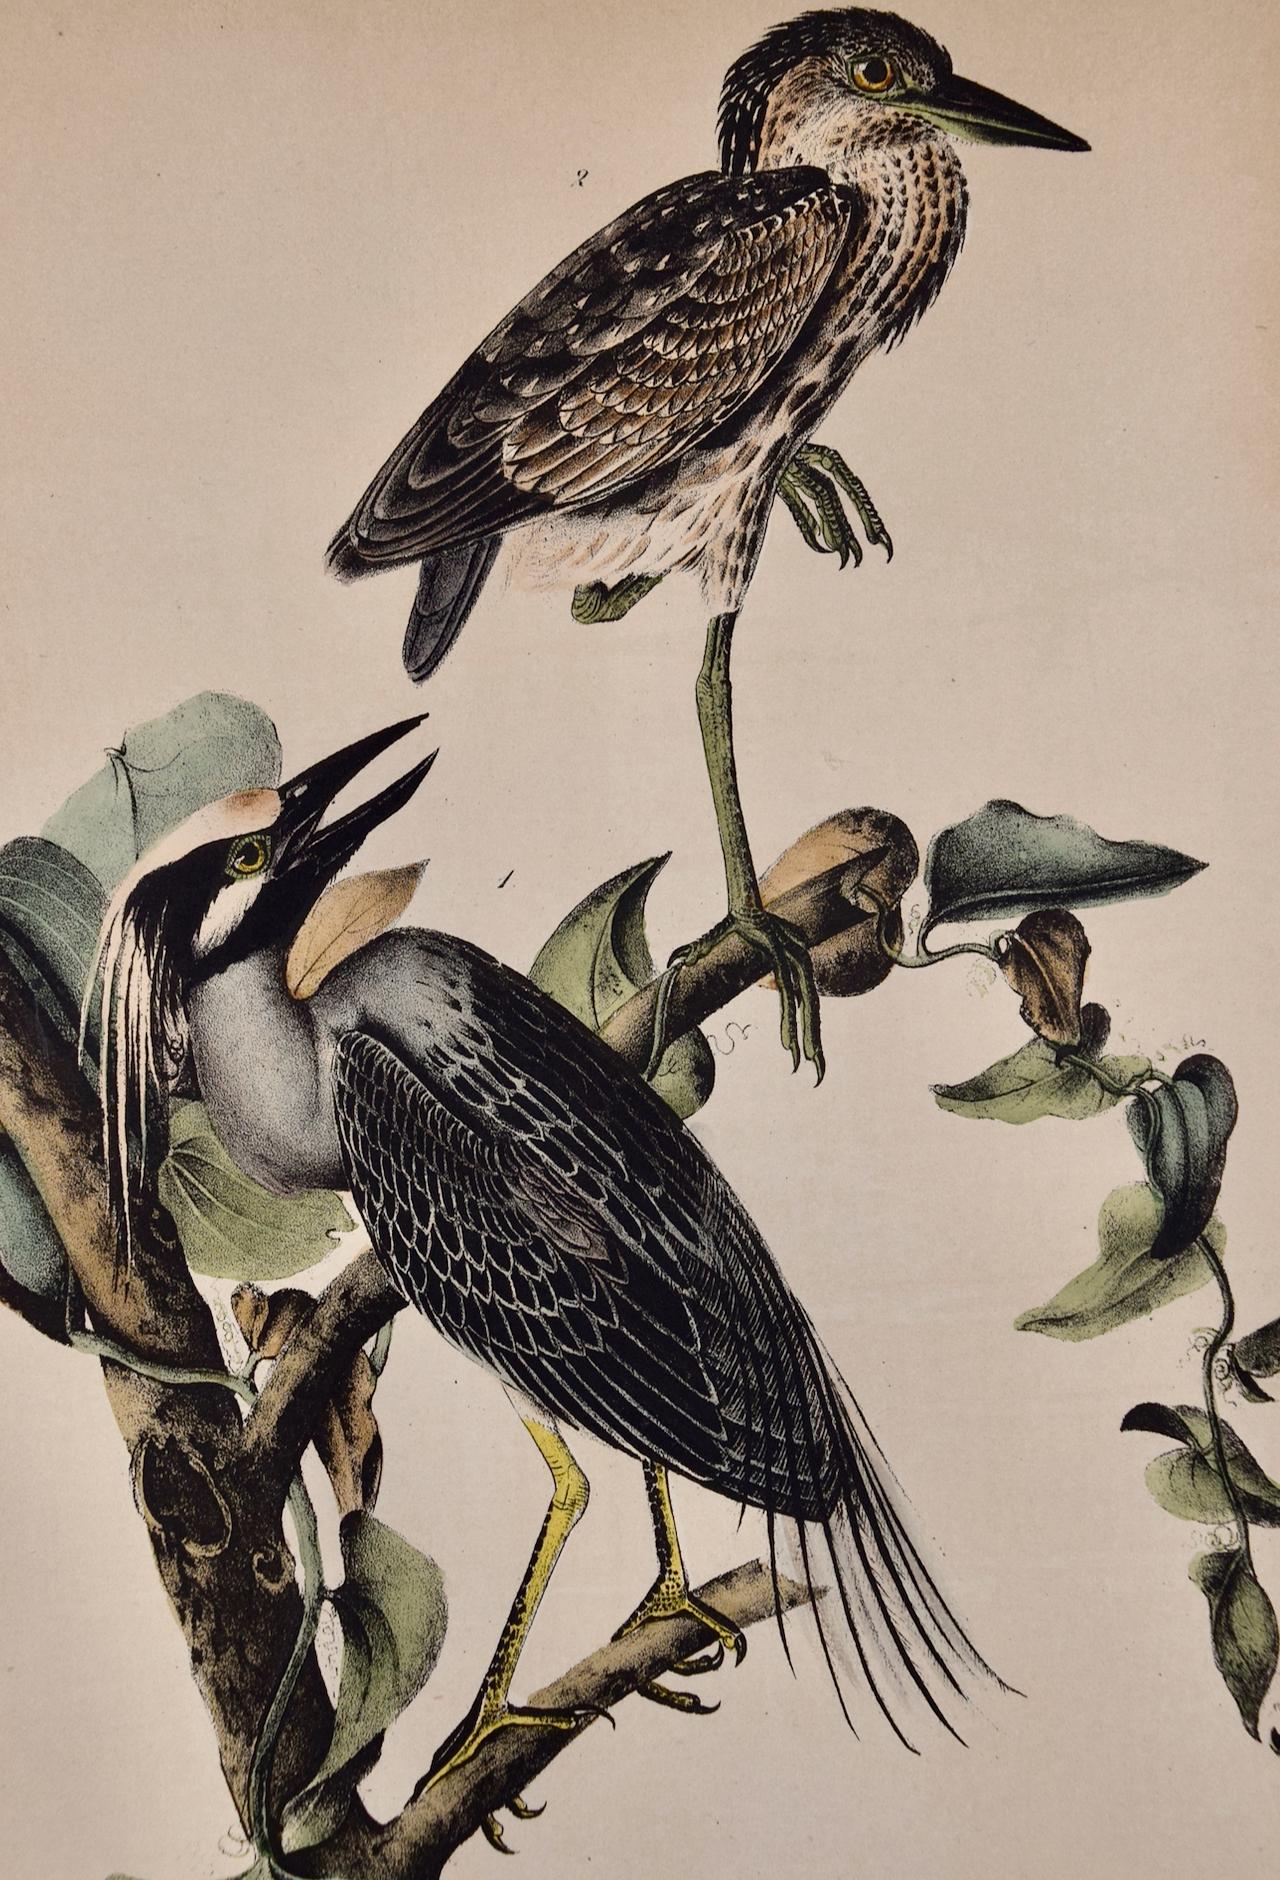 Night Heron Birds: An Original 19th C. Audubon Hand-colored Bird Lithograph - Print by John James Audubon